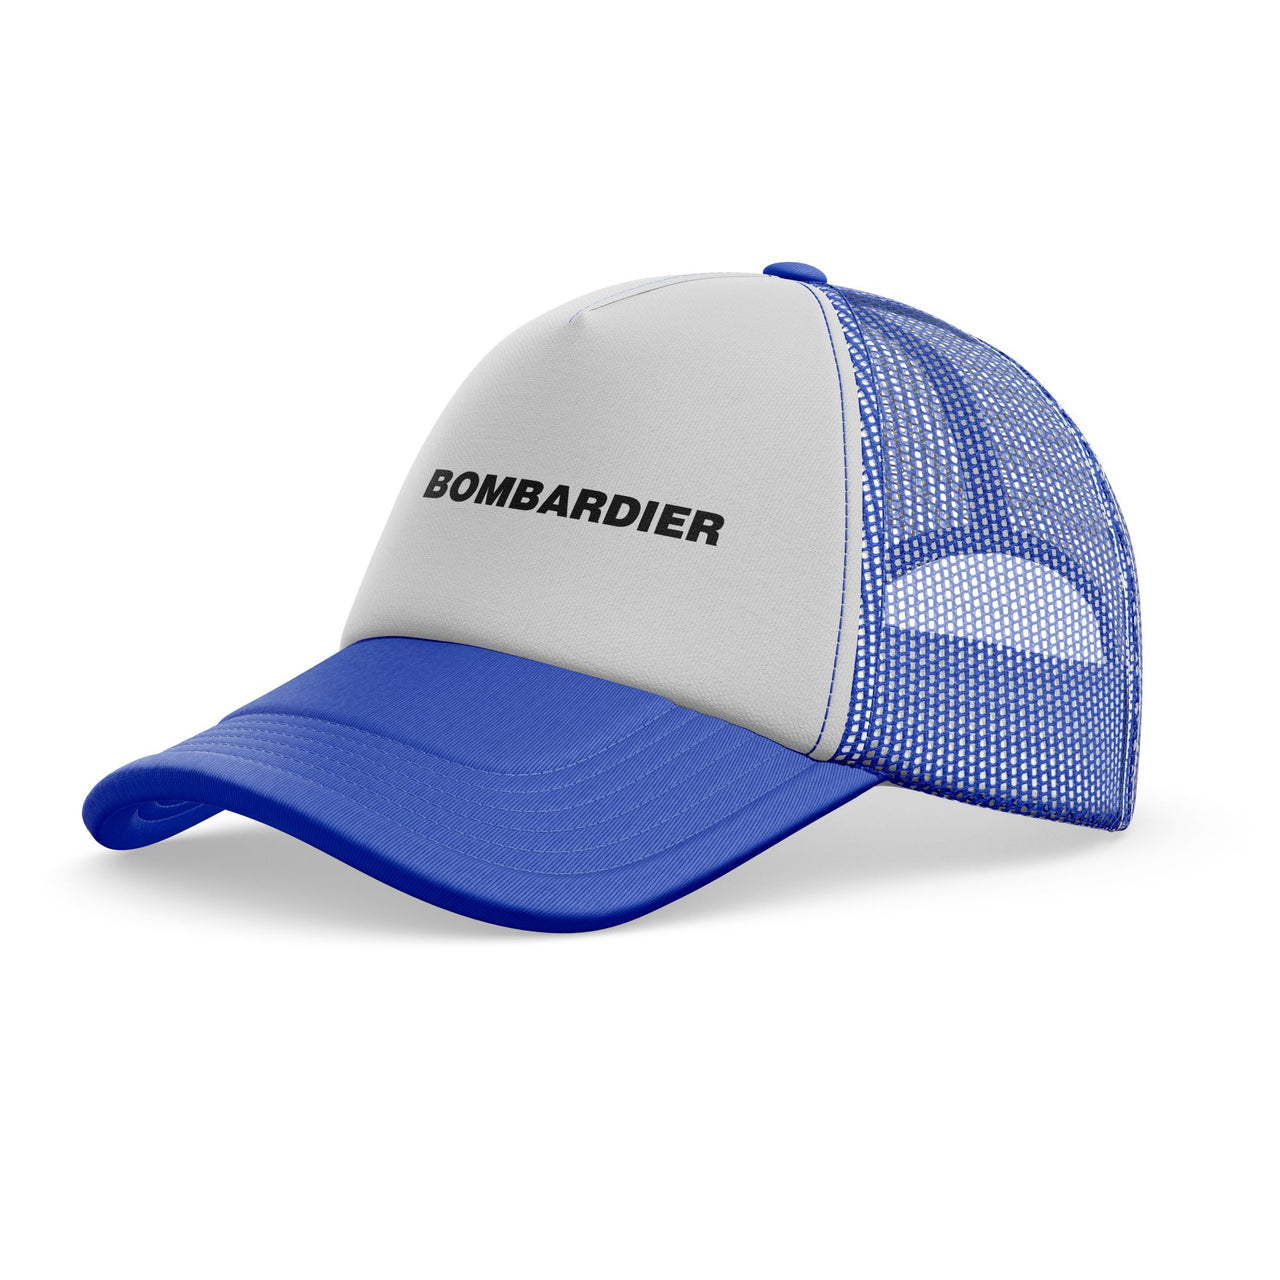 Bombardier & Text Designed Trucker Caps & Hats